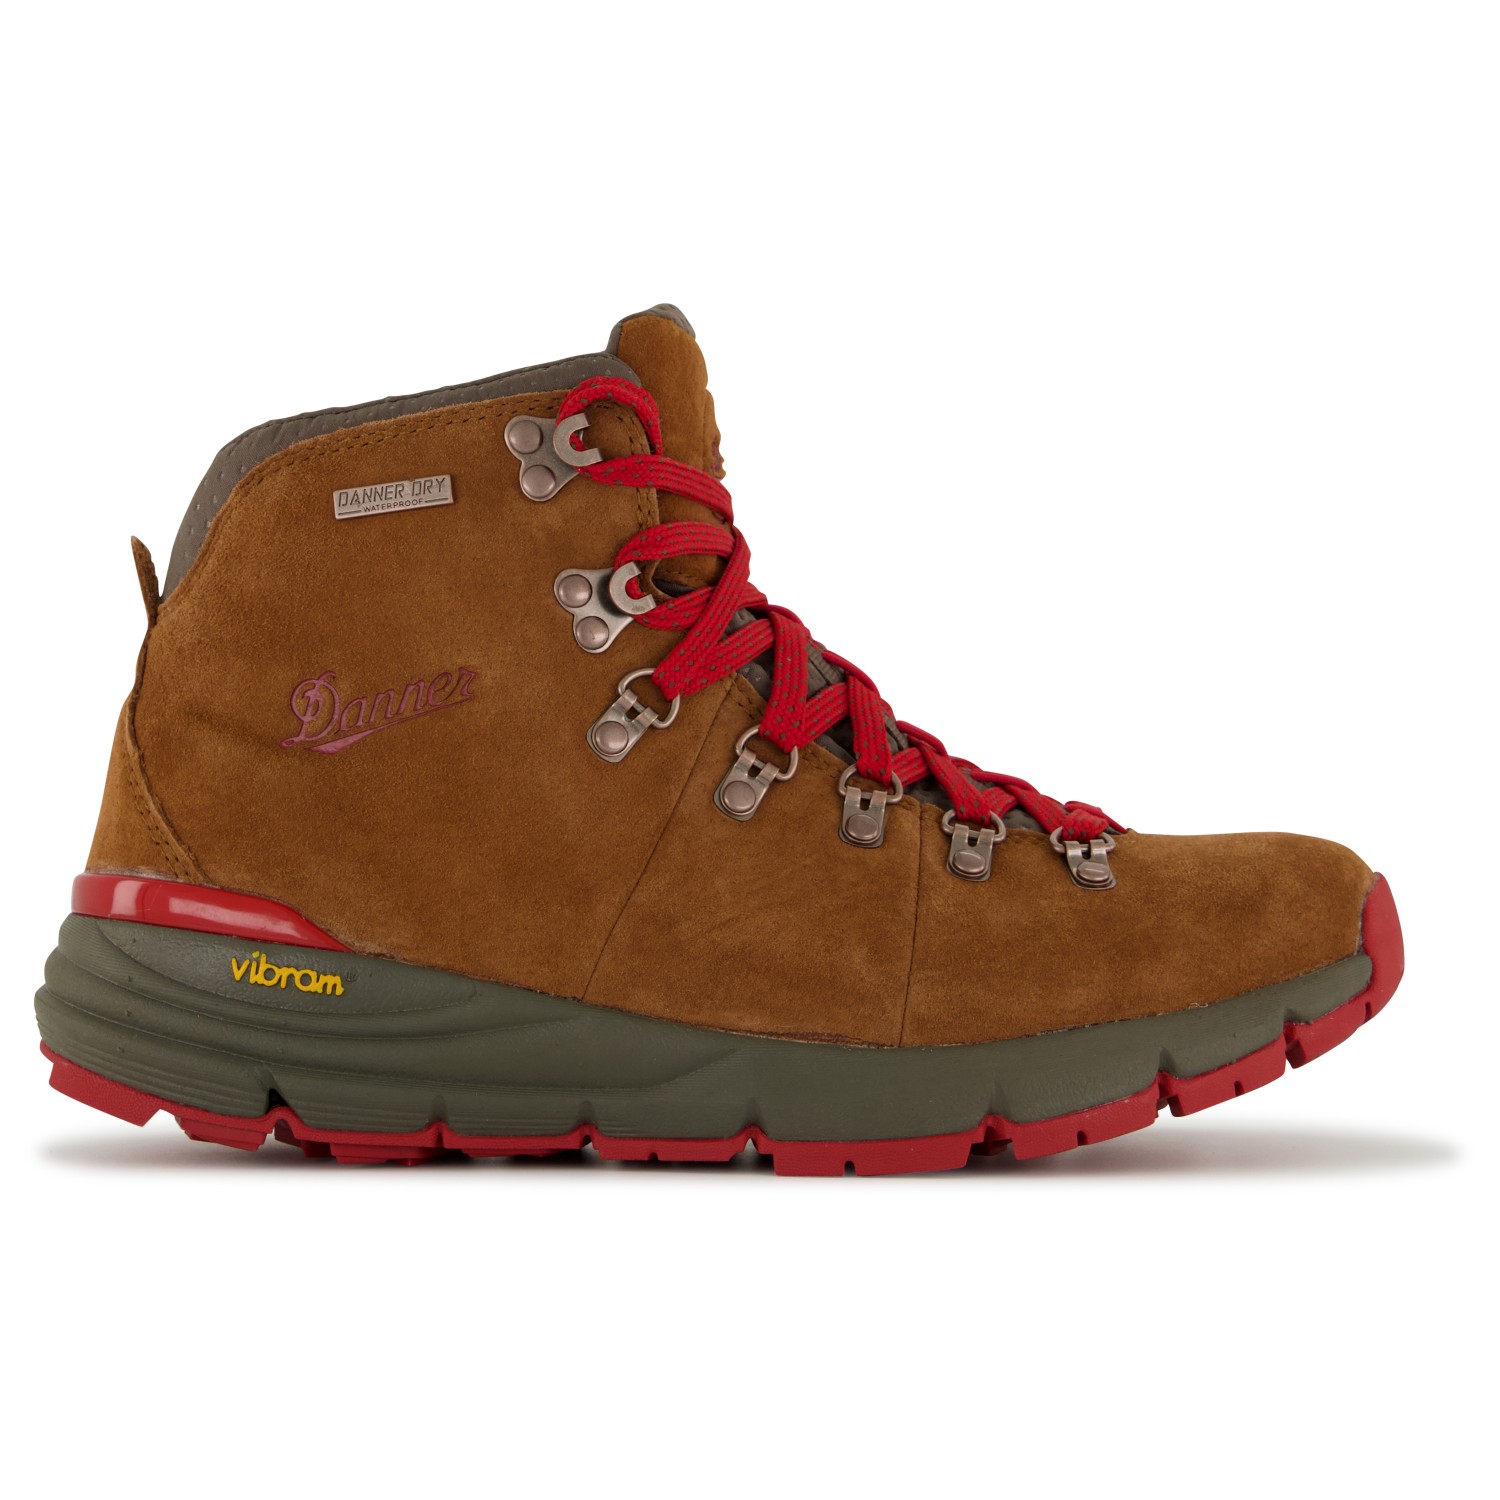 Ботинки для прогулки Danner Women's Mountain 600 4 5'', цвет Brown/Red